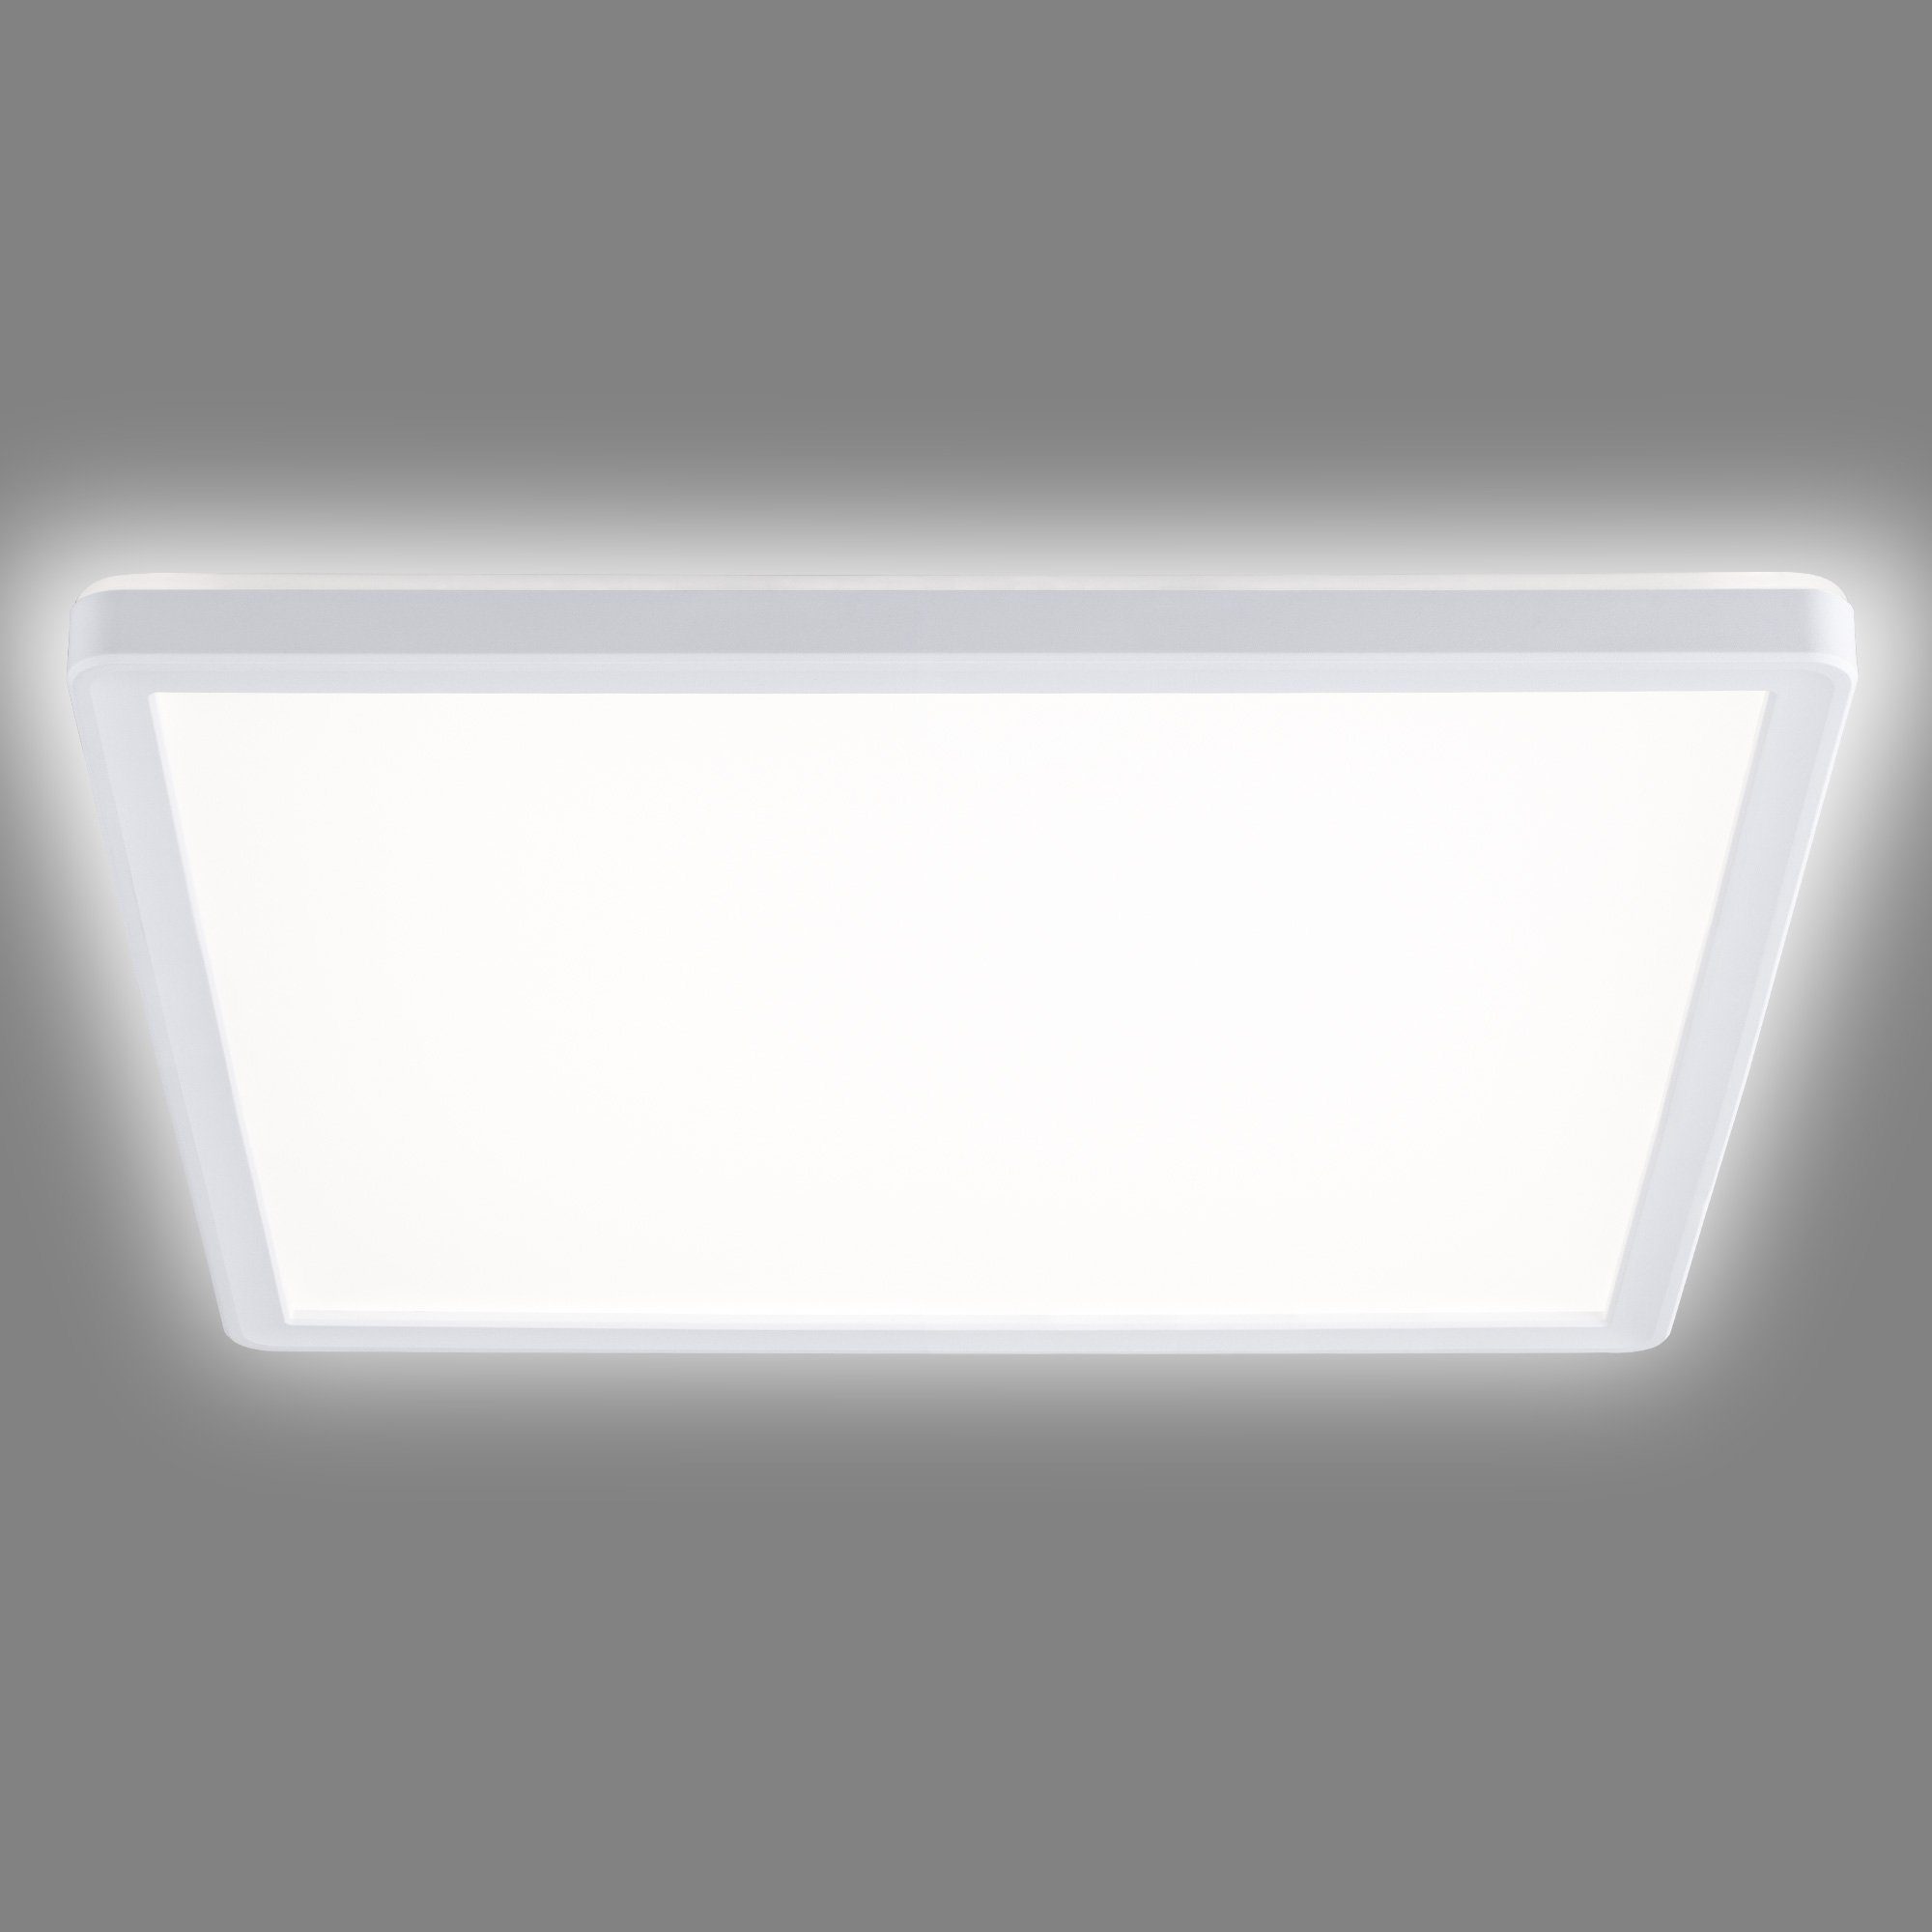 Navaris LED Deckenleuchte, LED fest integriert, LED Deckenlampe mit  zusätzlicher Hintergrundbeleuchtung - 18 Watt - 29,3 x 29,3 x 2,8cm - 4000K  - LED Dachlampe Panel ultra flach quadratisch